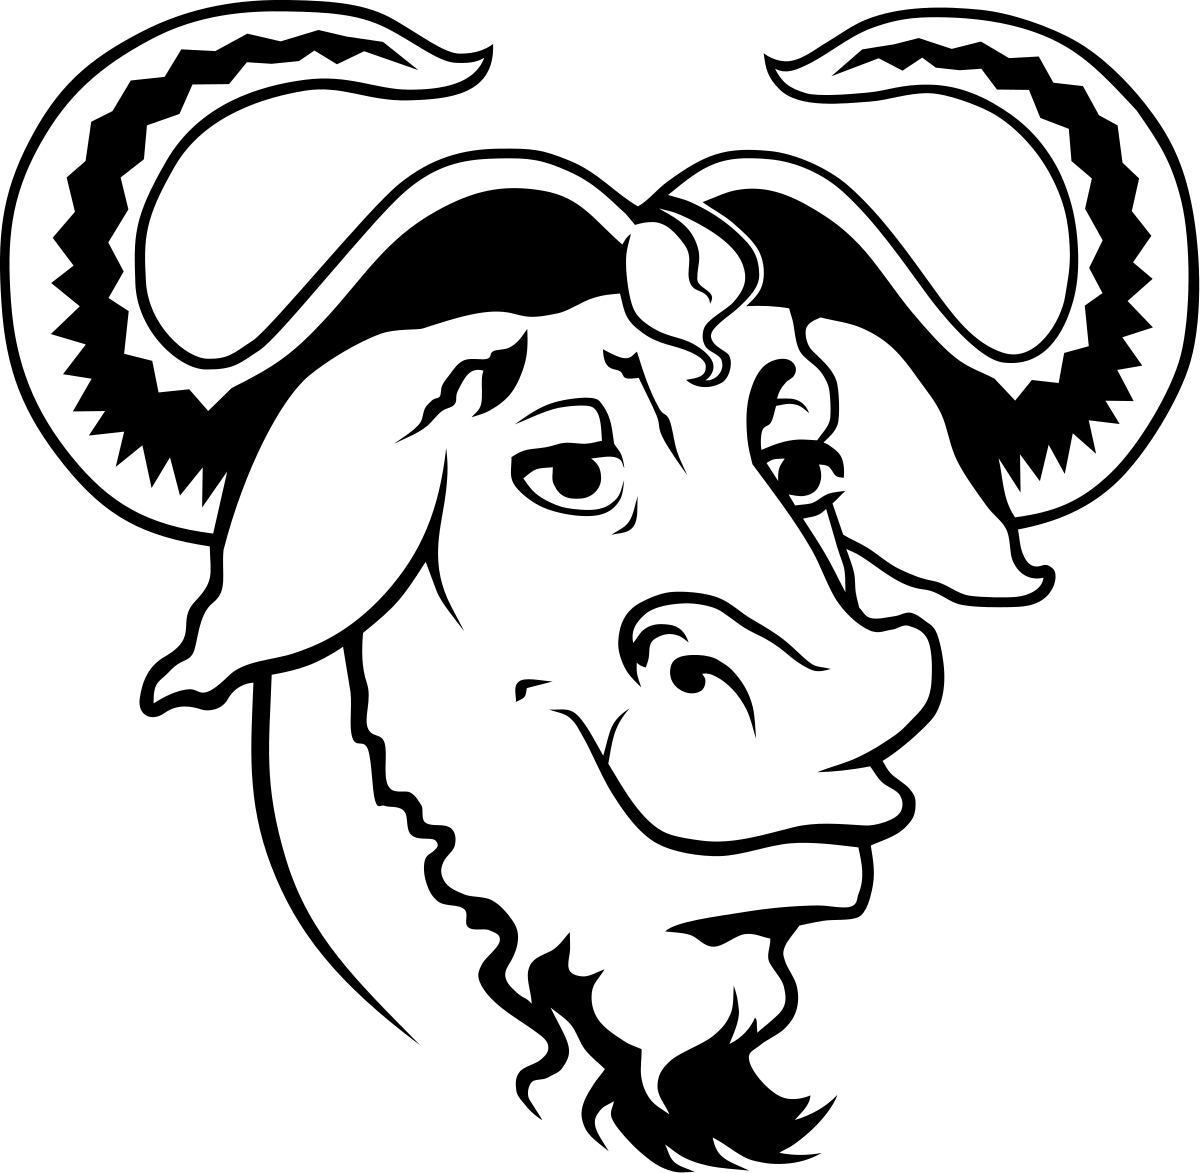 ¿GNU y Linux o simplemente Linux?